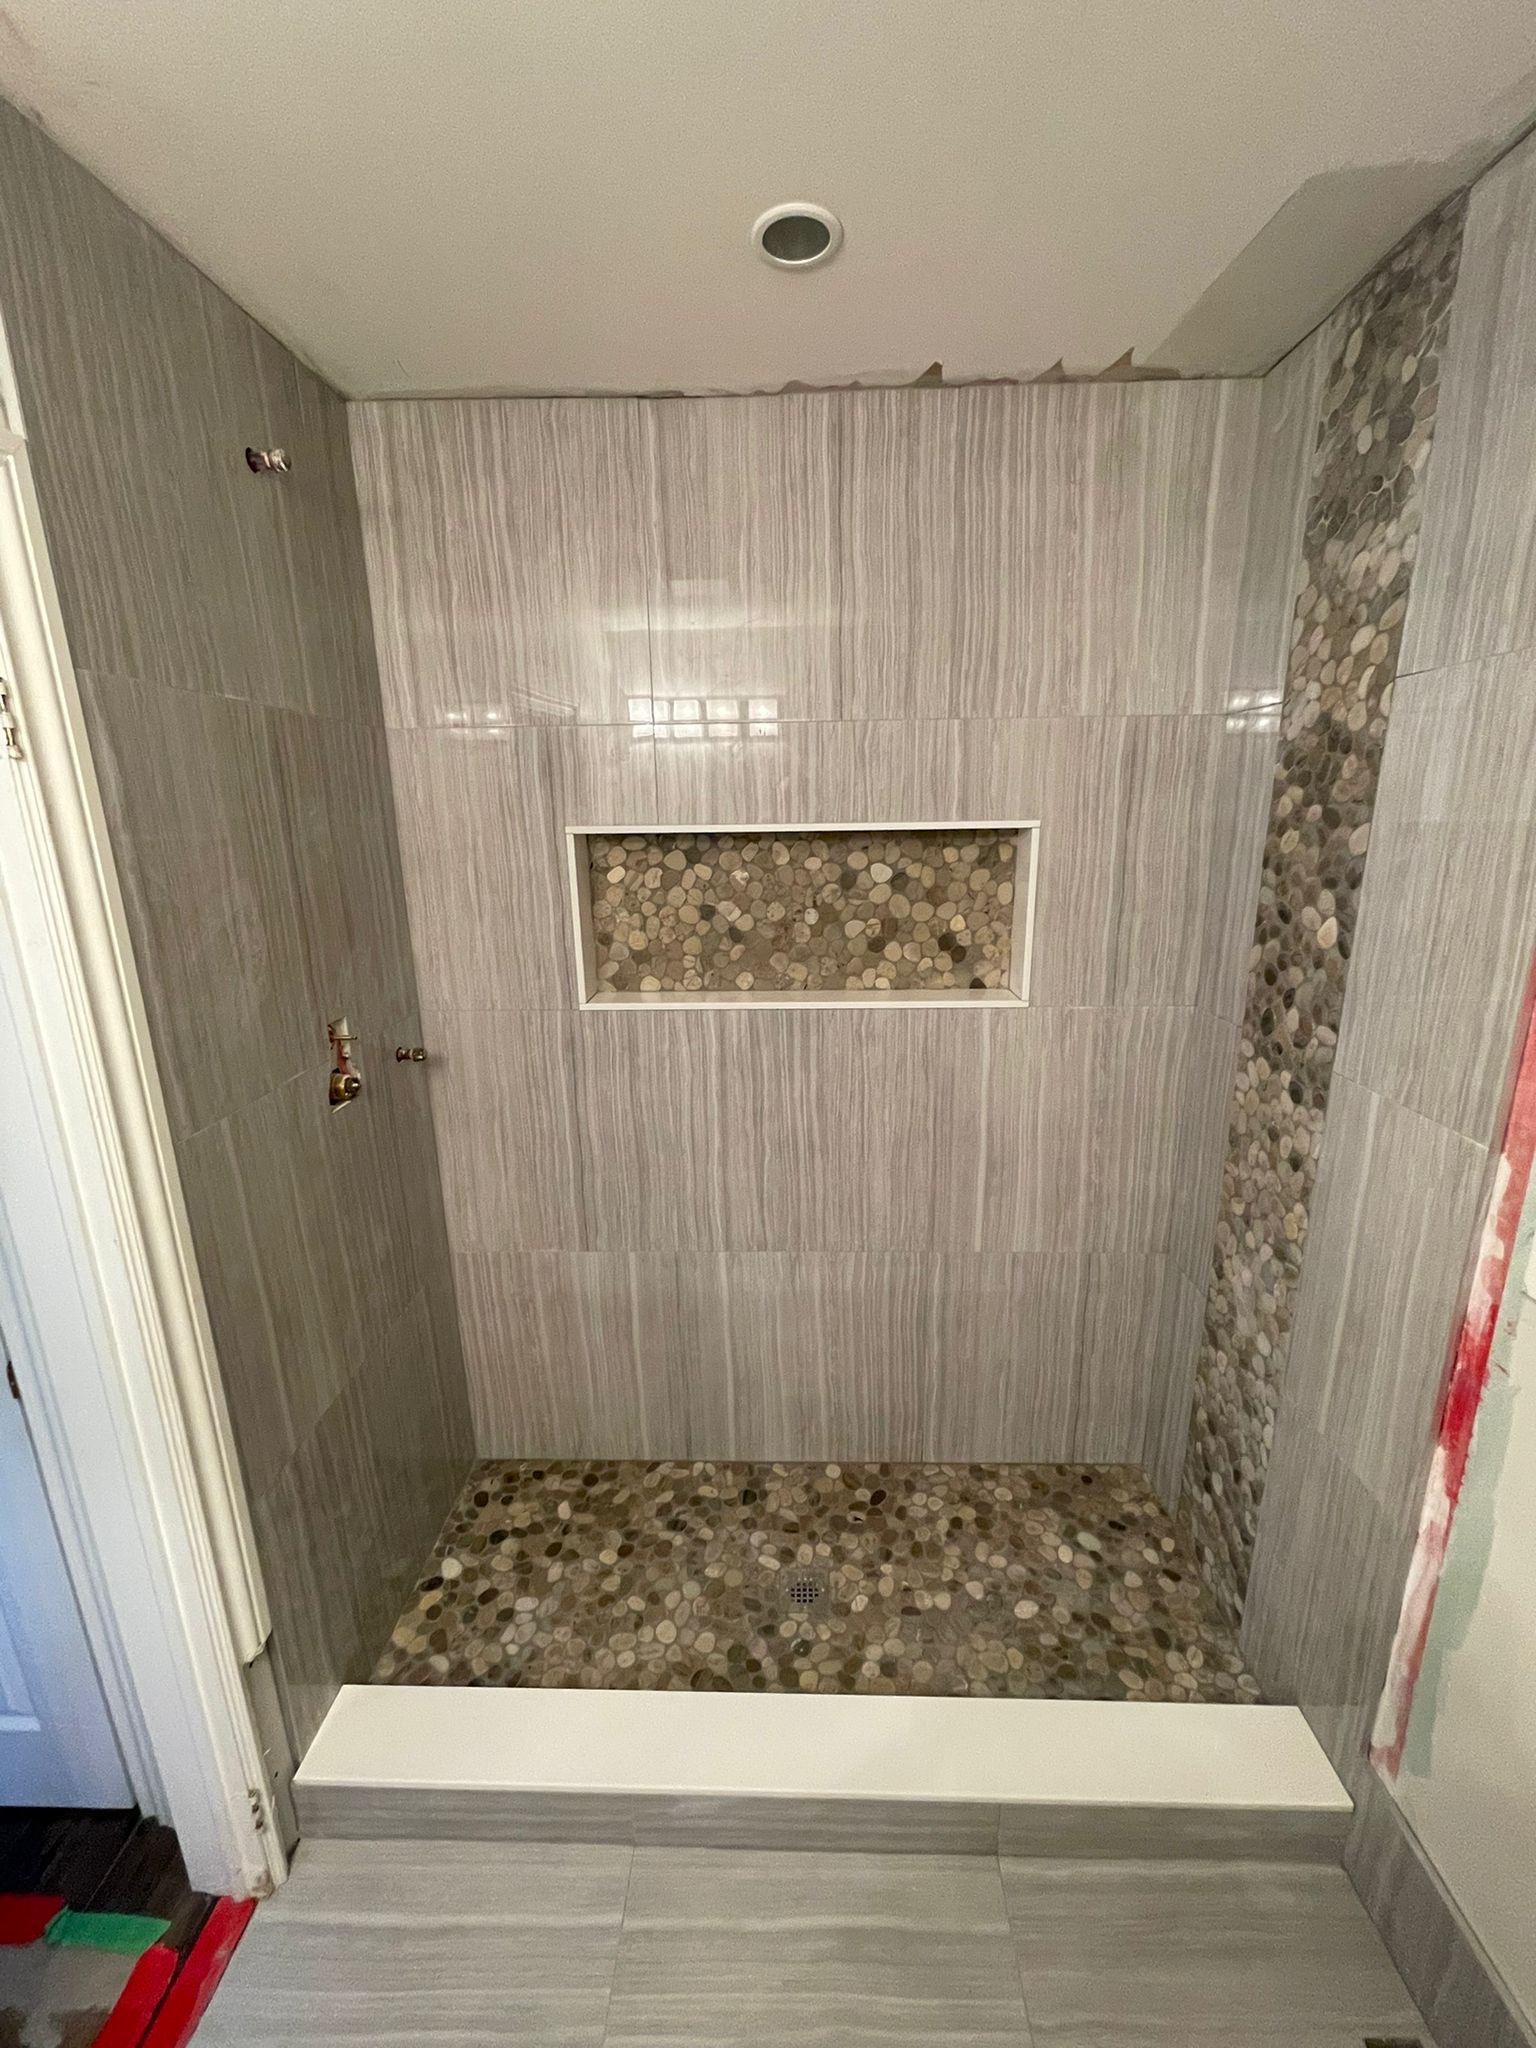 Caledon Bathroom tiles installation at Markom Tiles